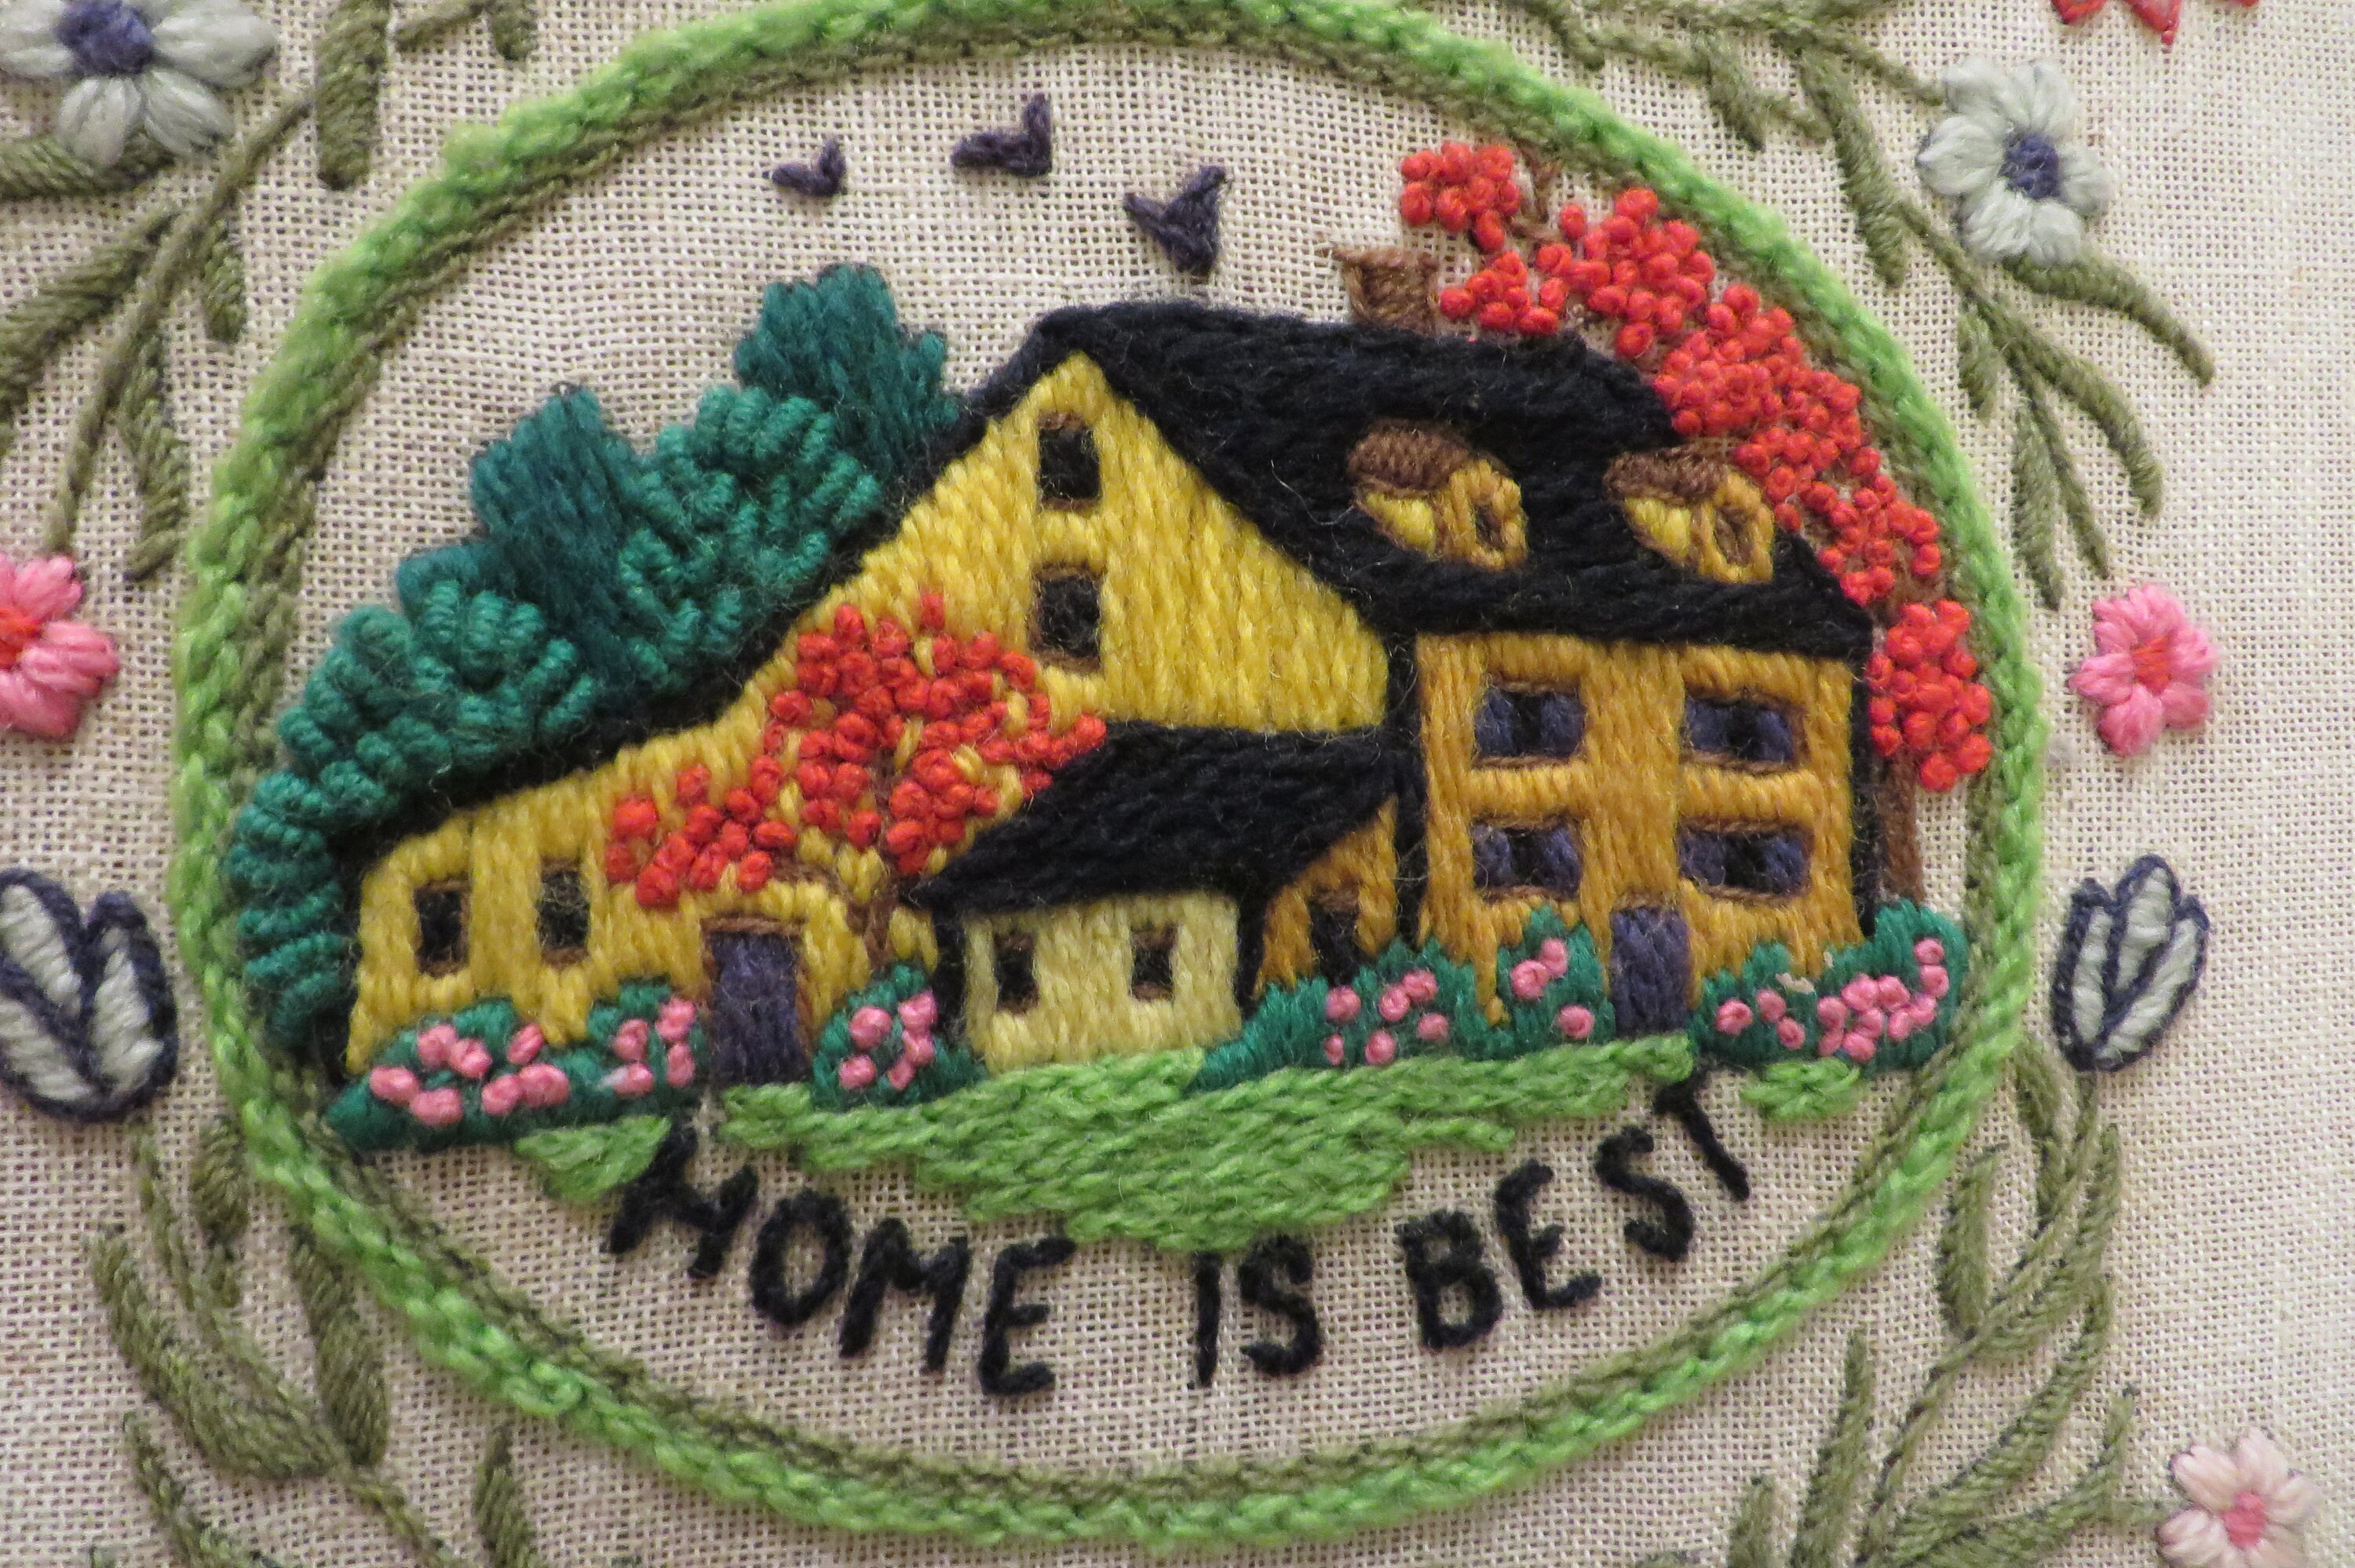 Custom House #157 Latticed Strawberries Crewel Embroidery Kit